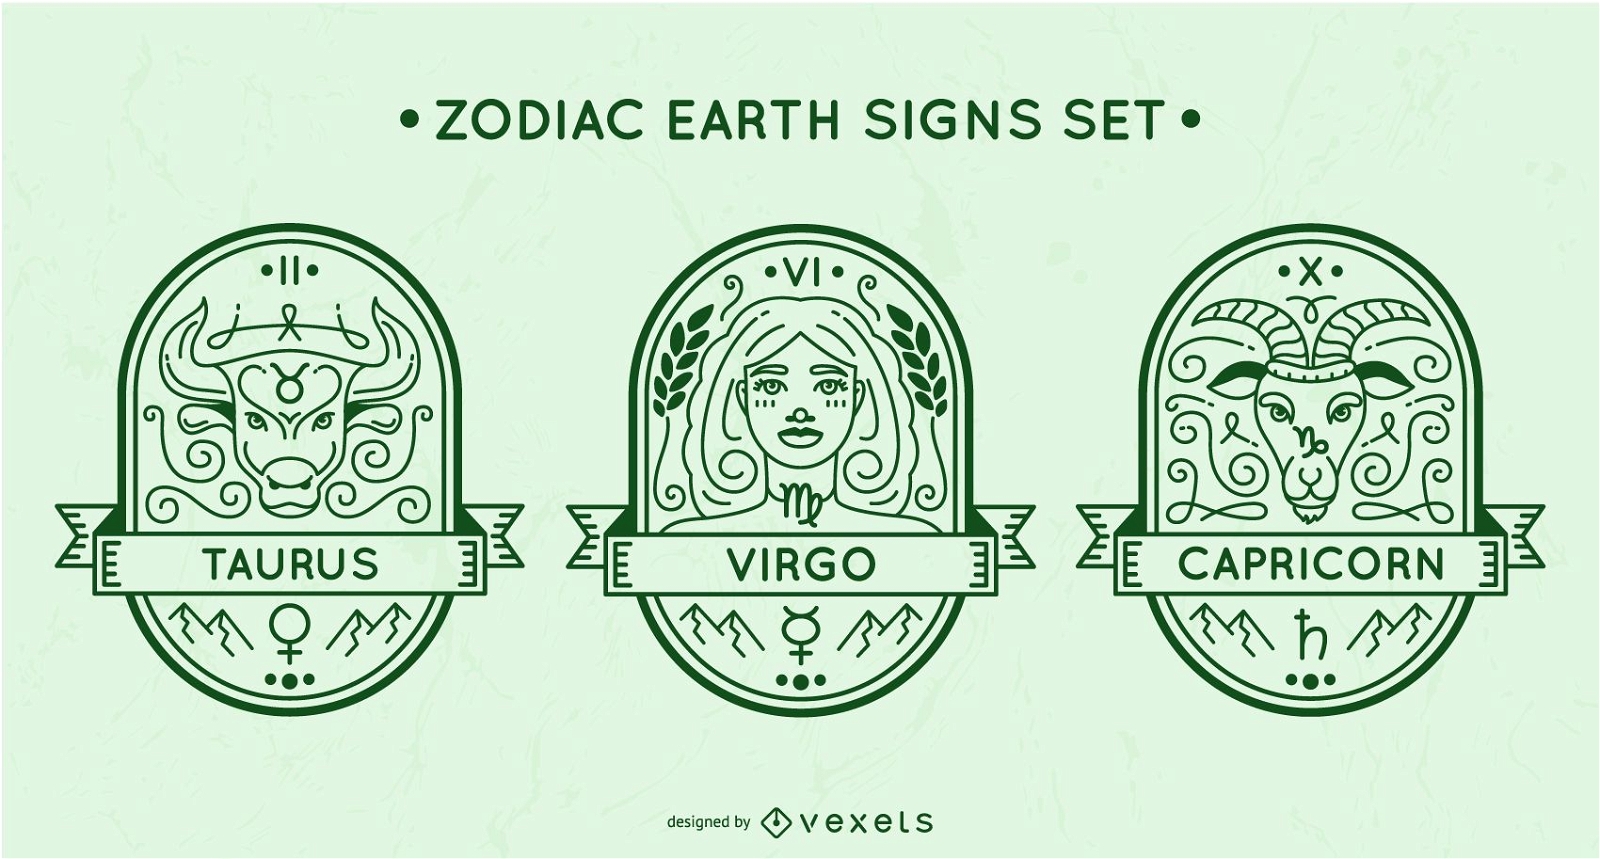 Zodiac earth signs set